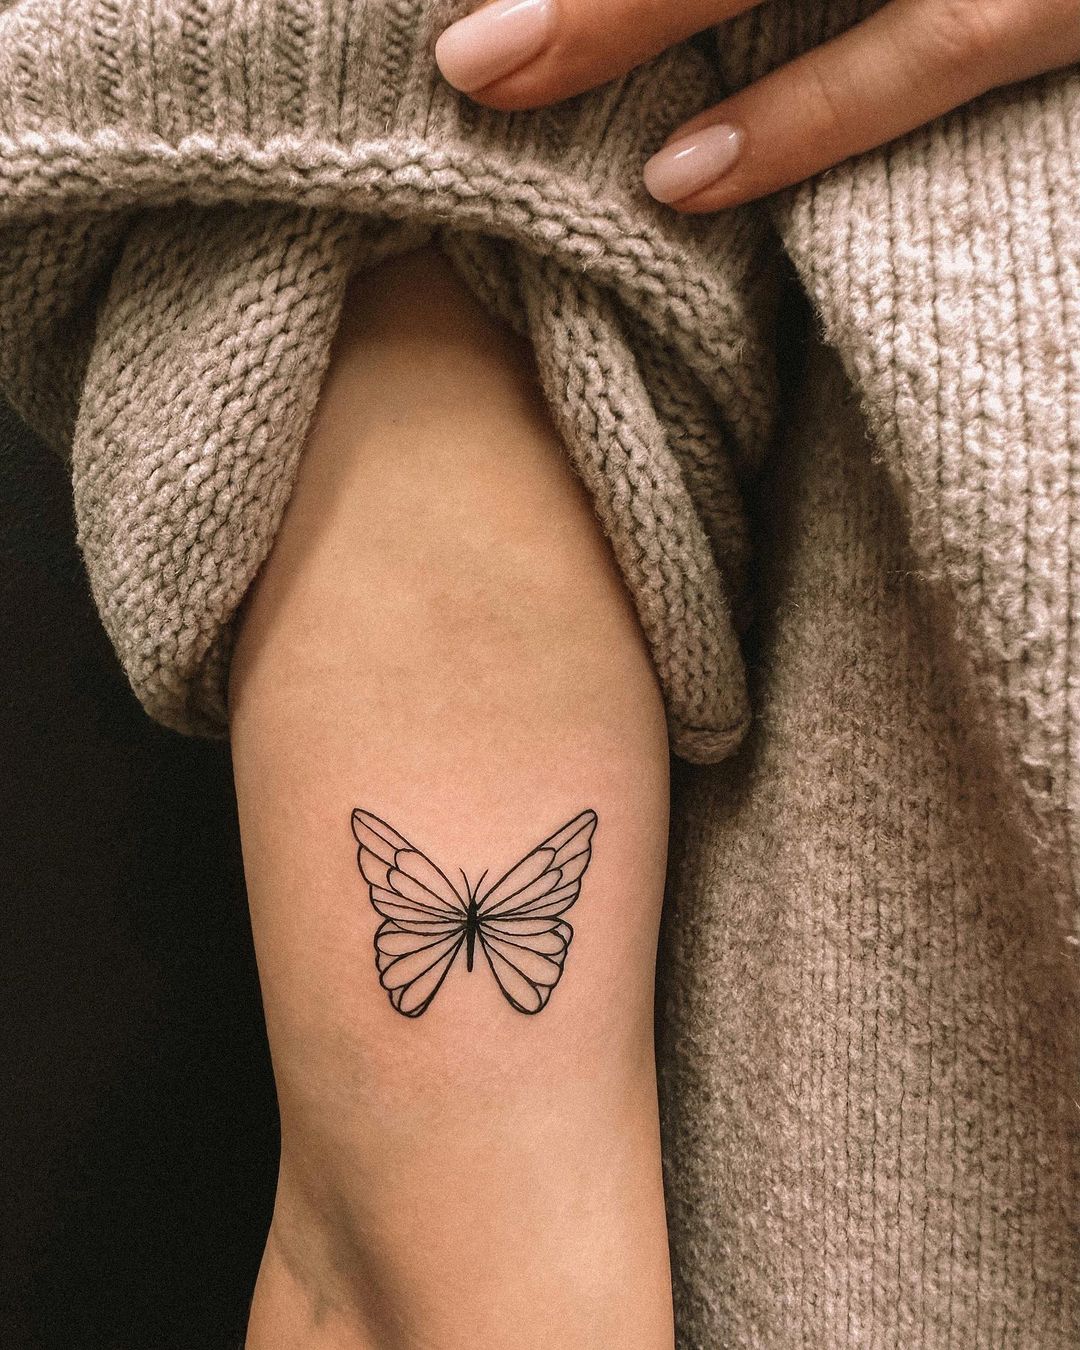 Butterfly tattoo by hybridink.helsinki